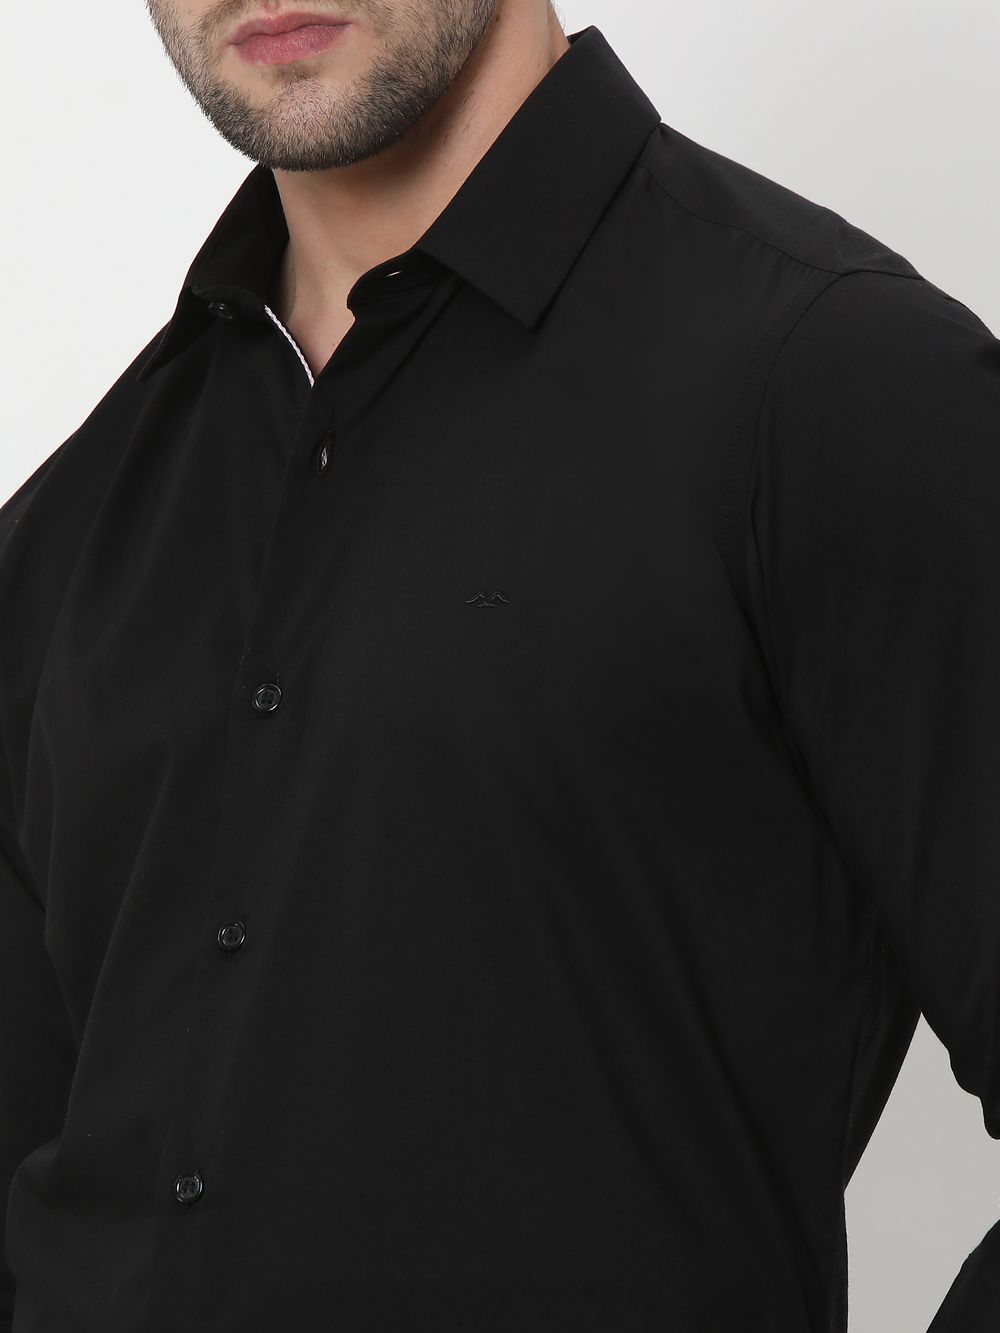 Black Stretch Plain Slim Fit Casual Shirt